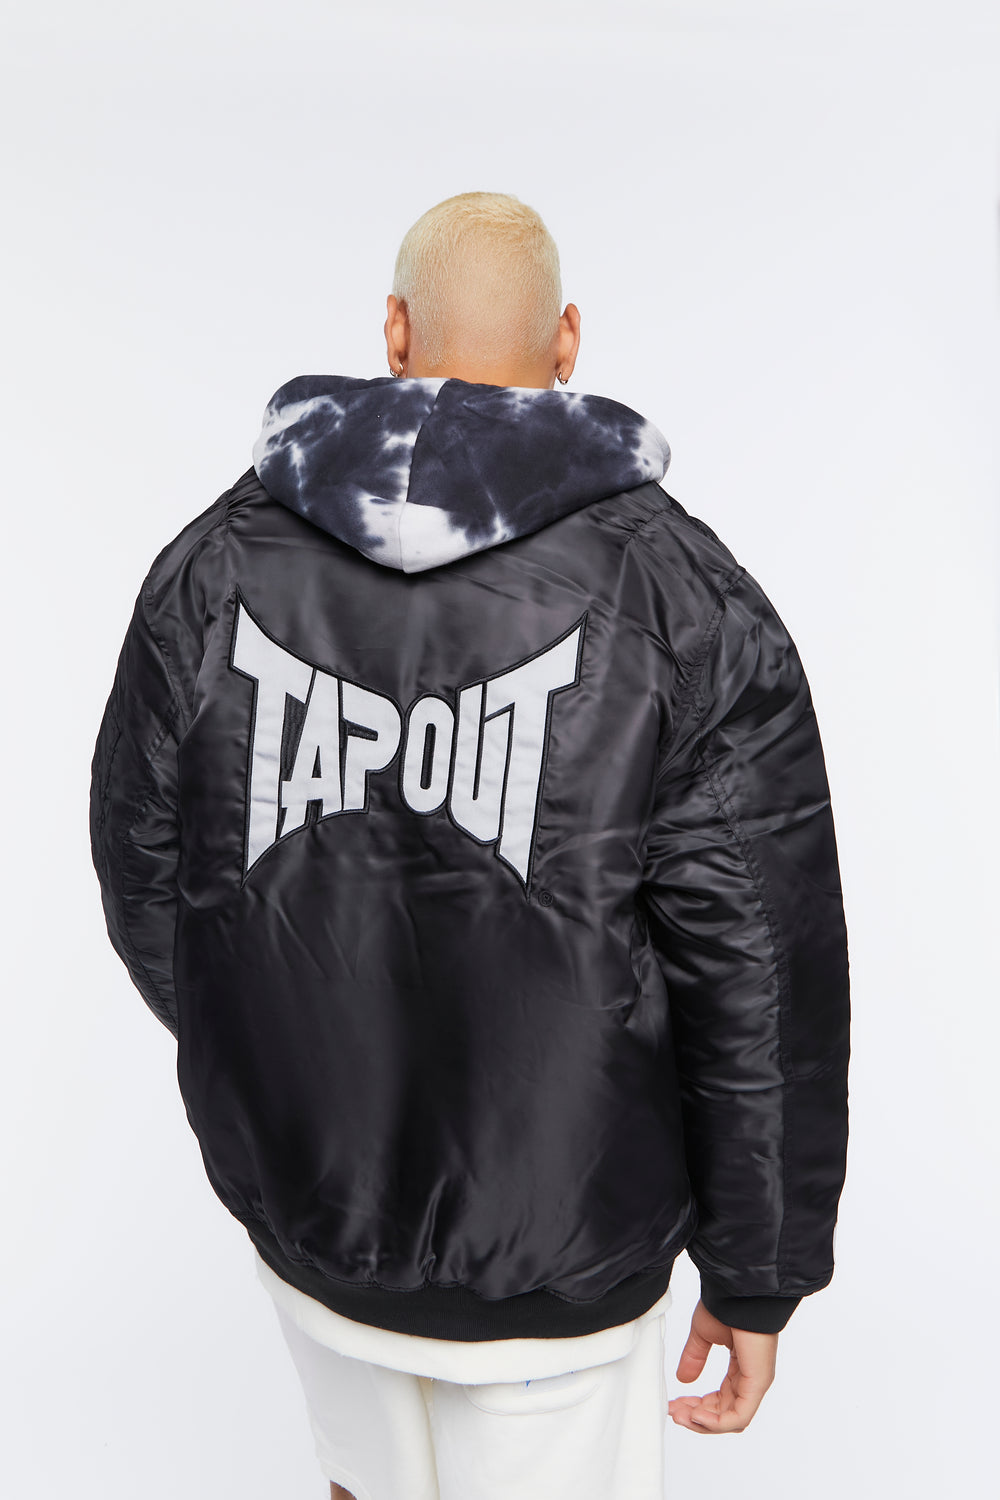 Tapout Hooded Bomber Jacket Black